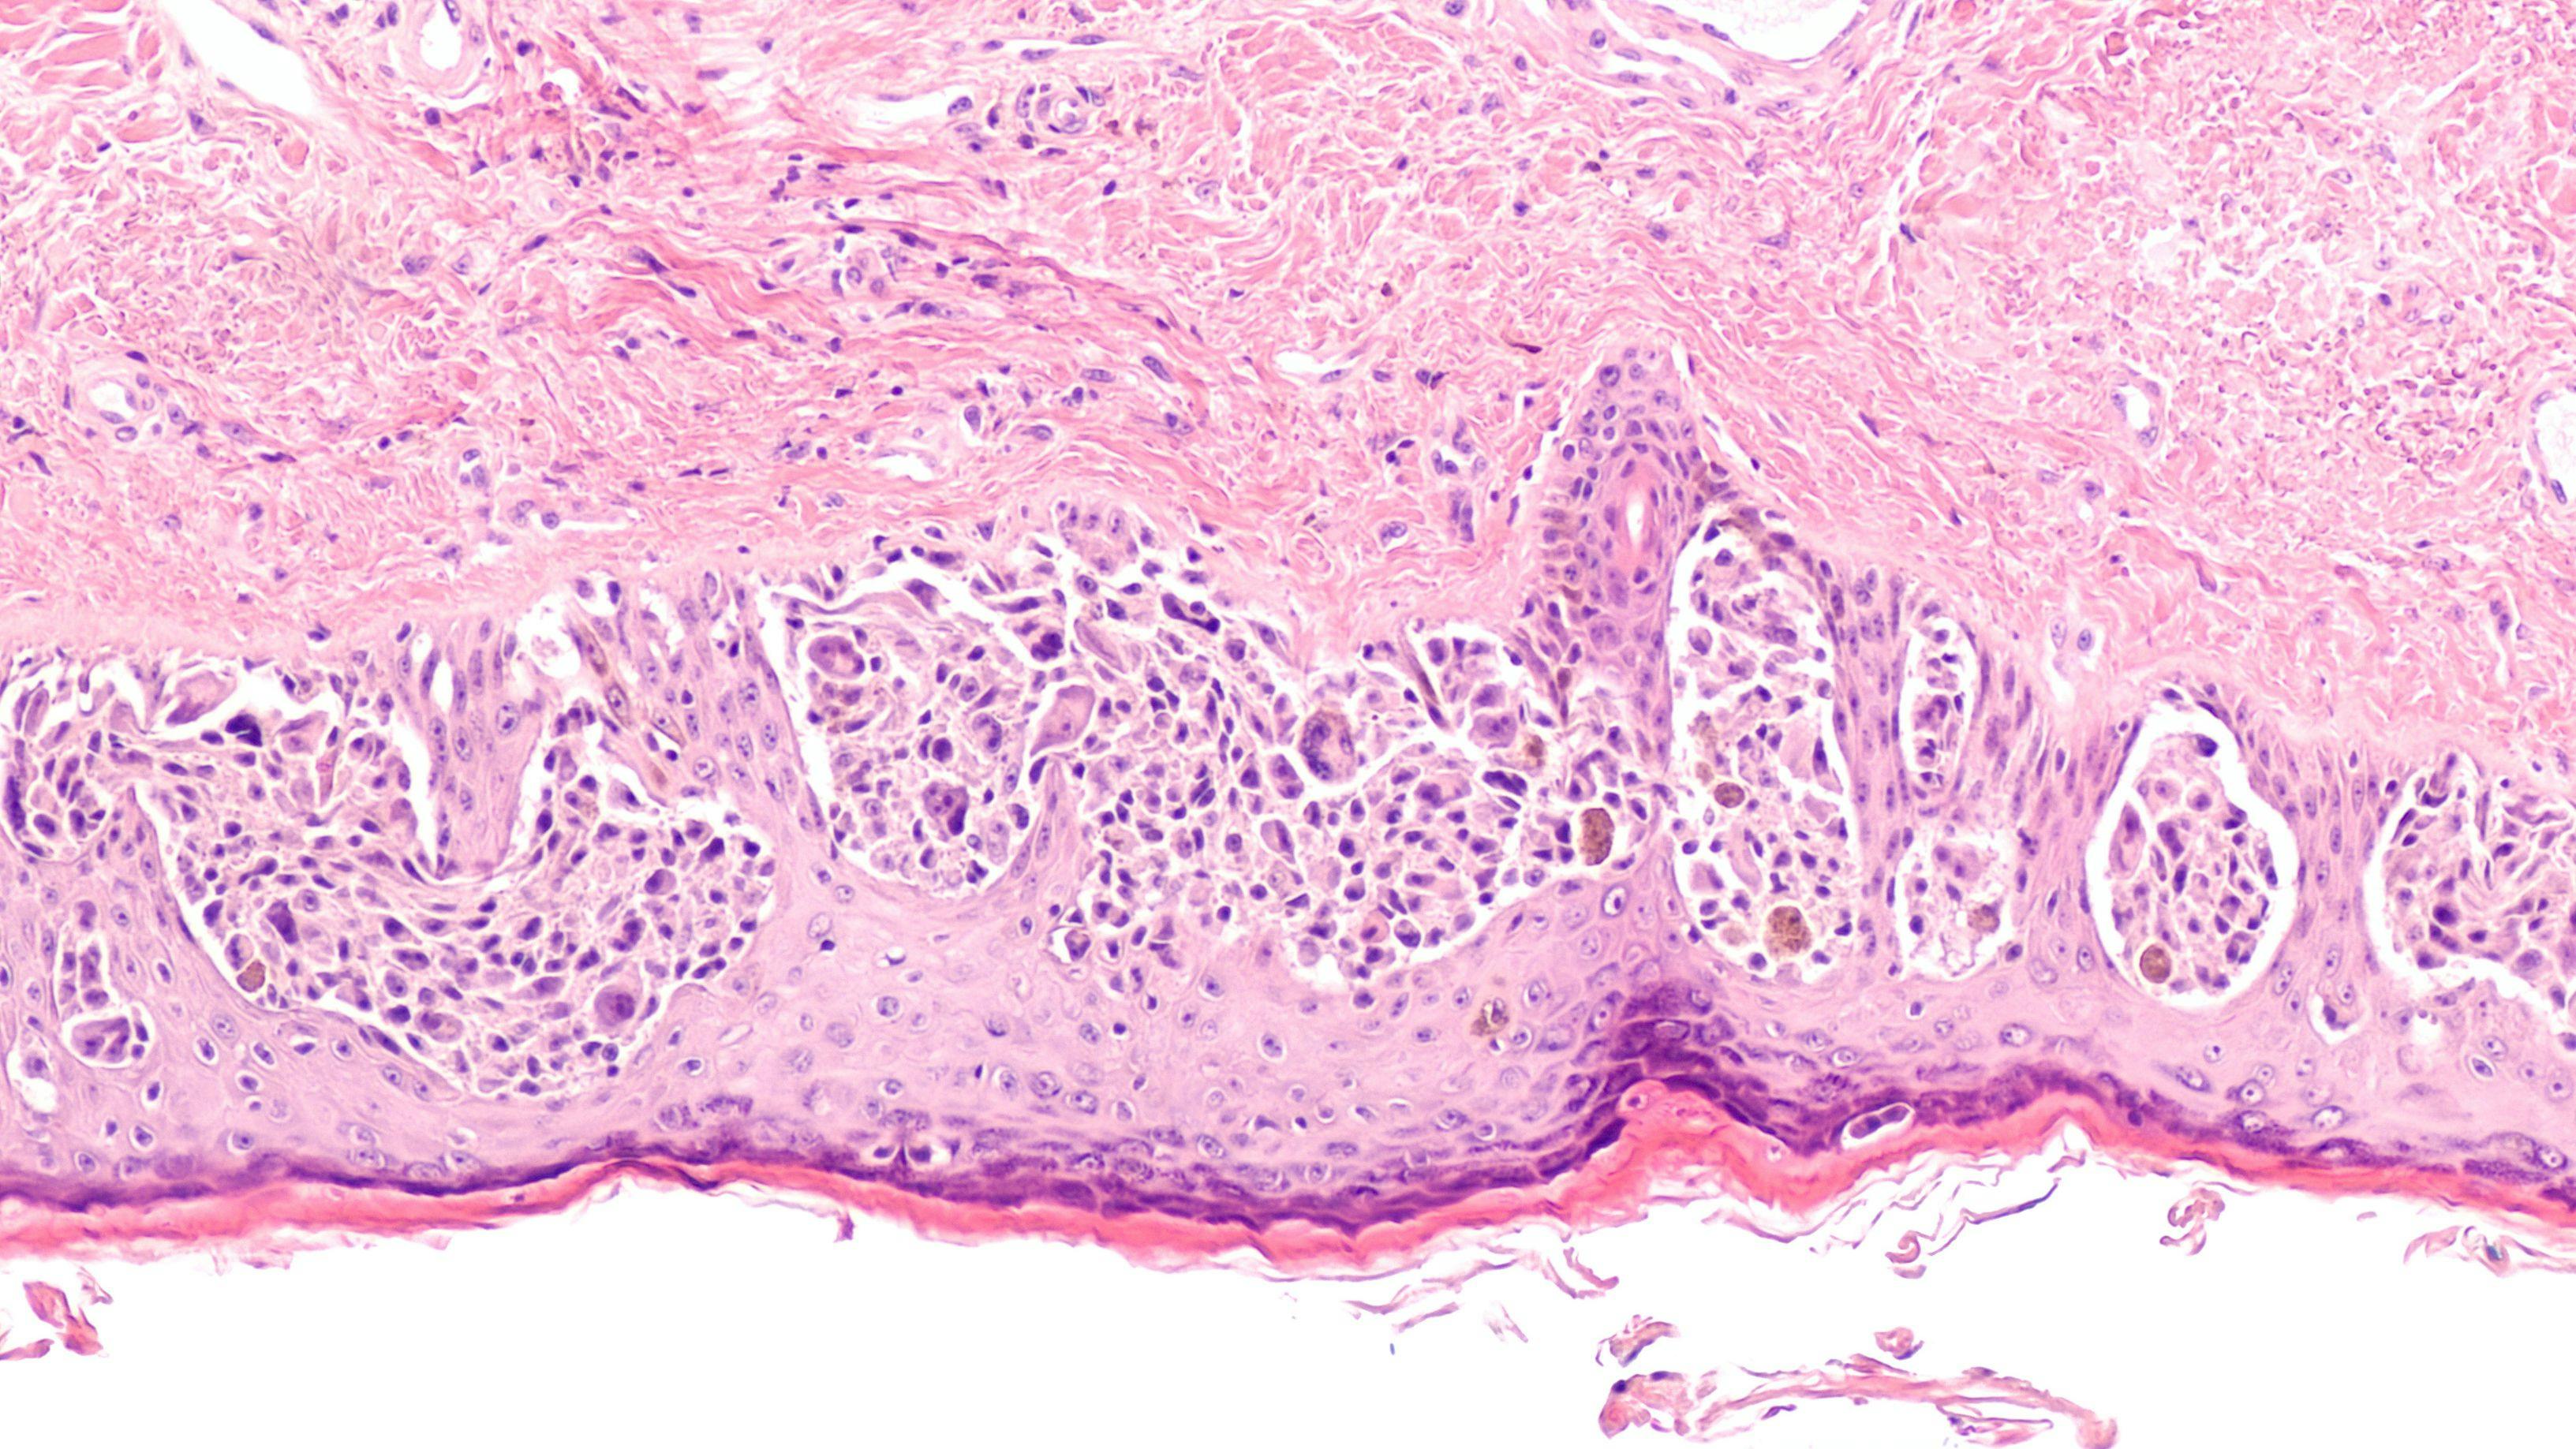 Lichen Sclerosus Present in 82% of Penile Melanomas